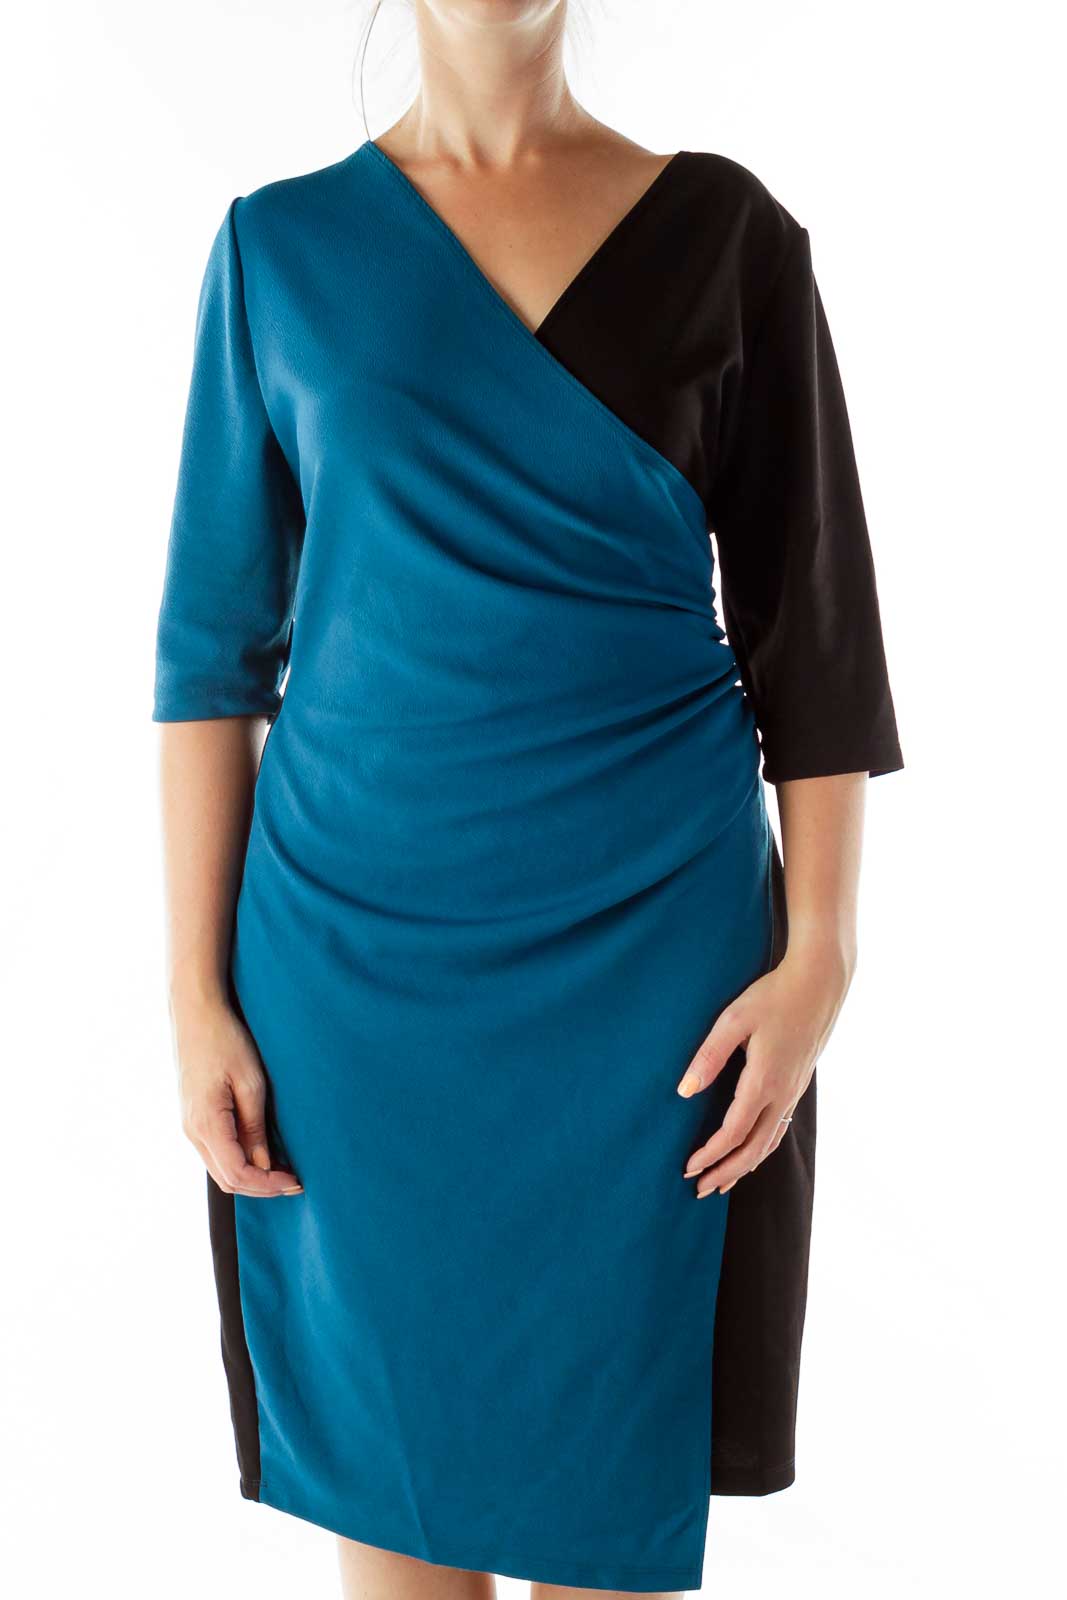 Black Blue Scrunched Wrap Work Dress Front